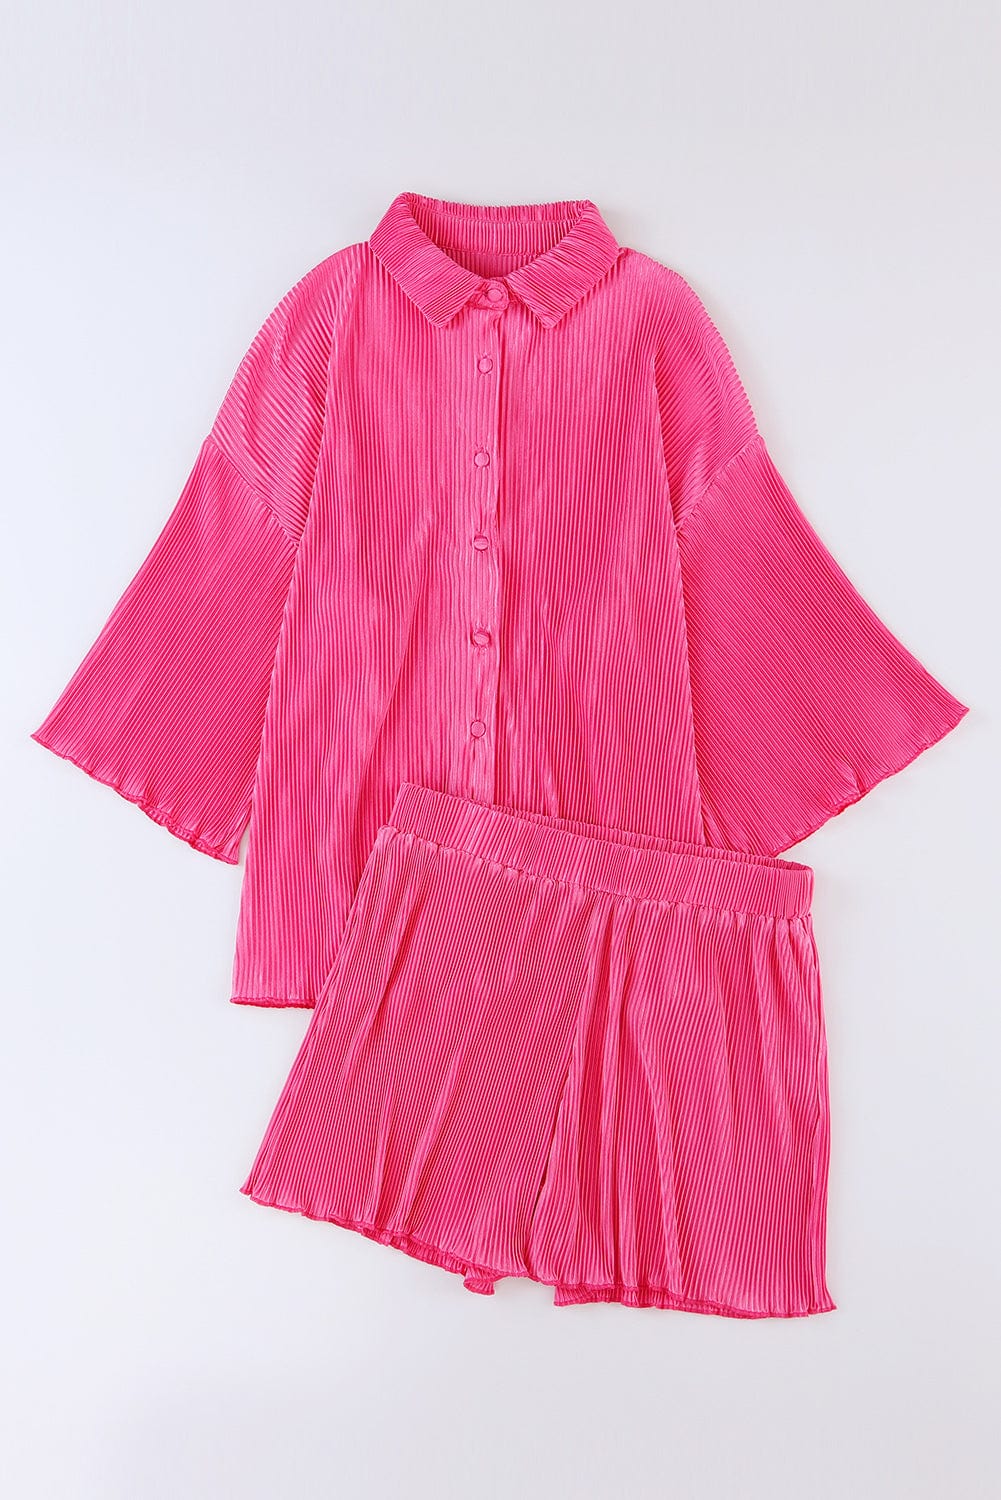 Shoppe EZR Loungewear Rose 3/4 Sleeves Pleated Shirt and High Waist Shorts Lounge Set